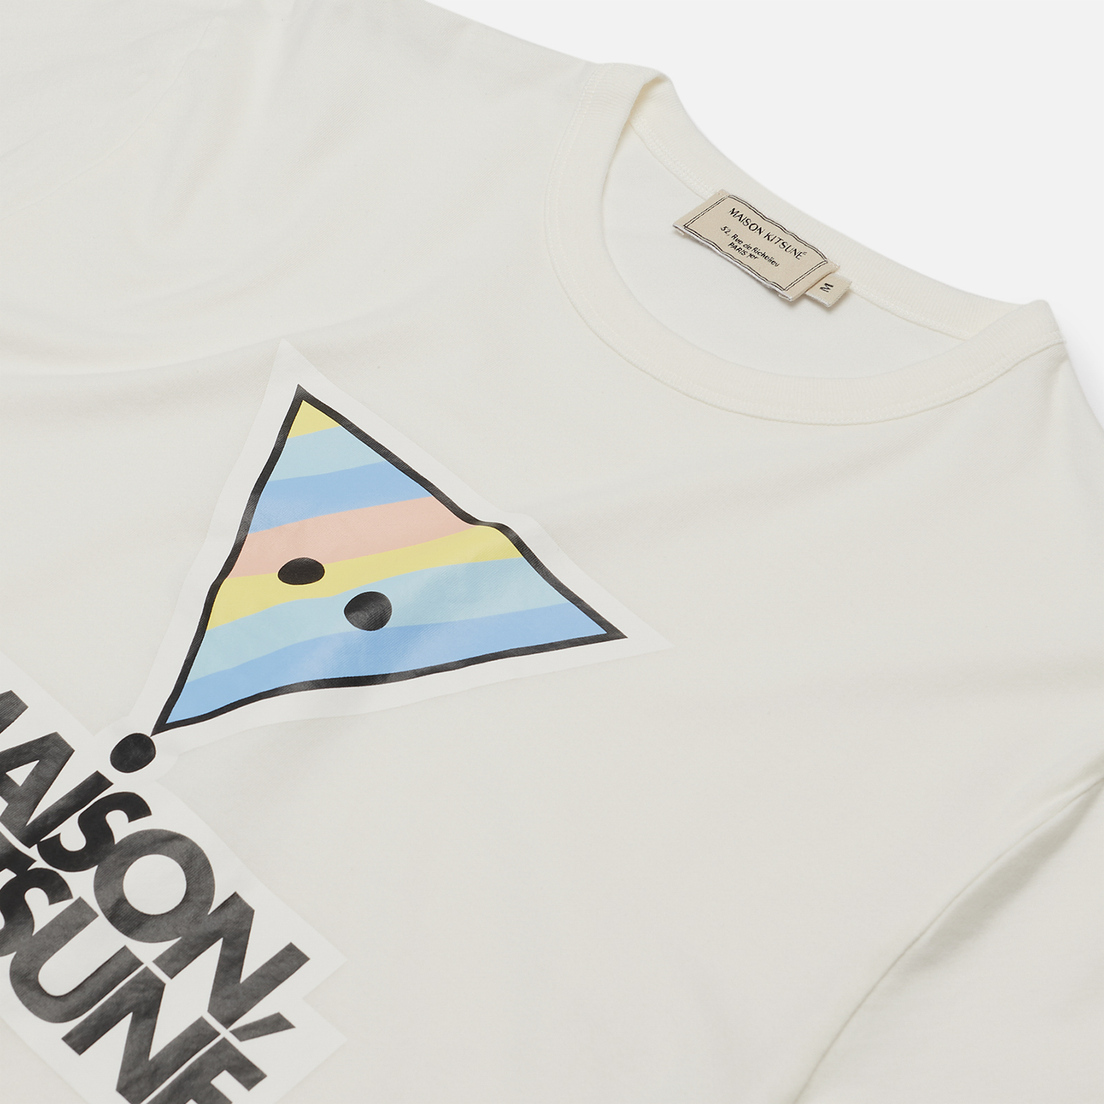 Maison Kitsune Мужская футболка Rainbow Triangle Fox Print